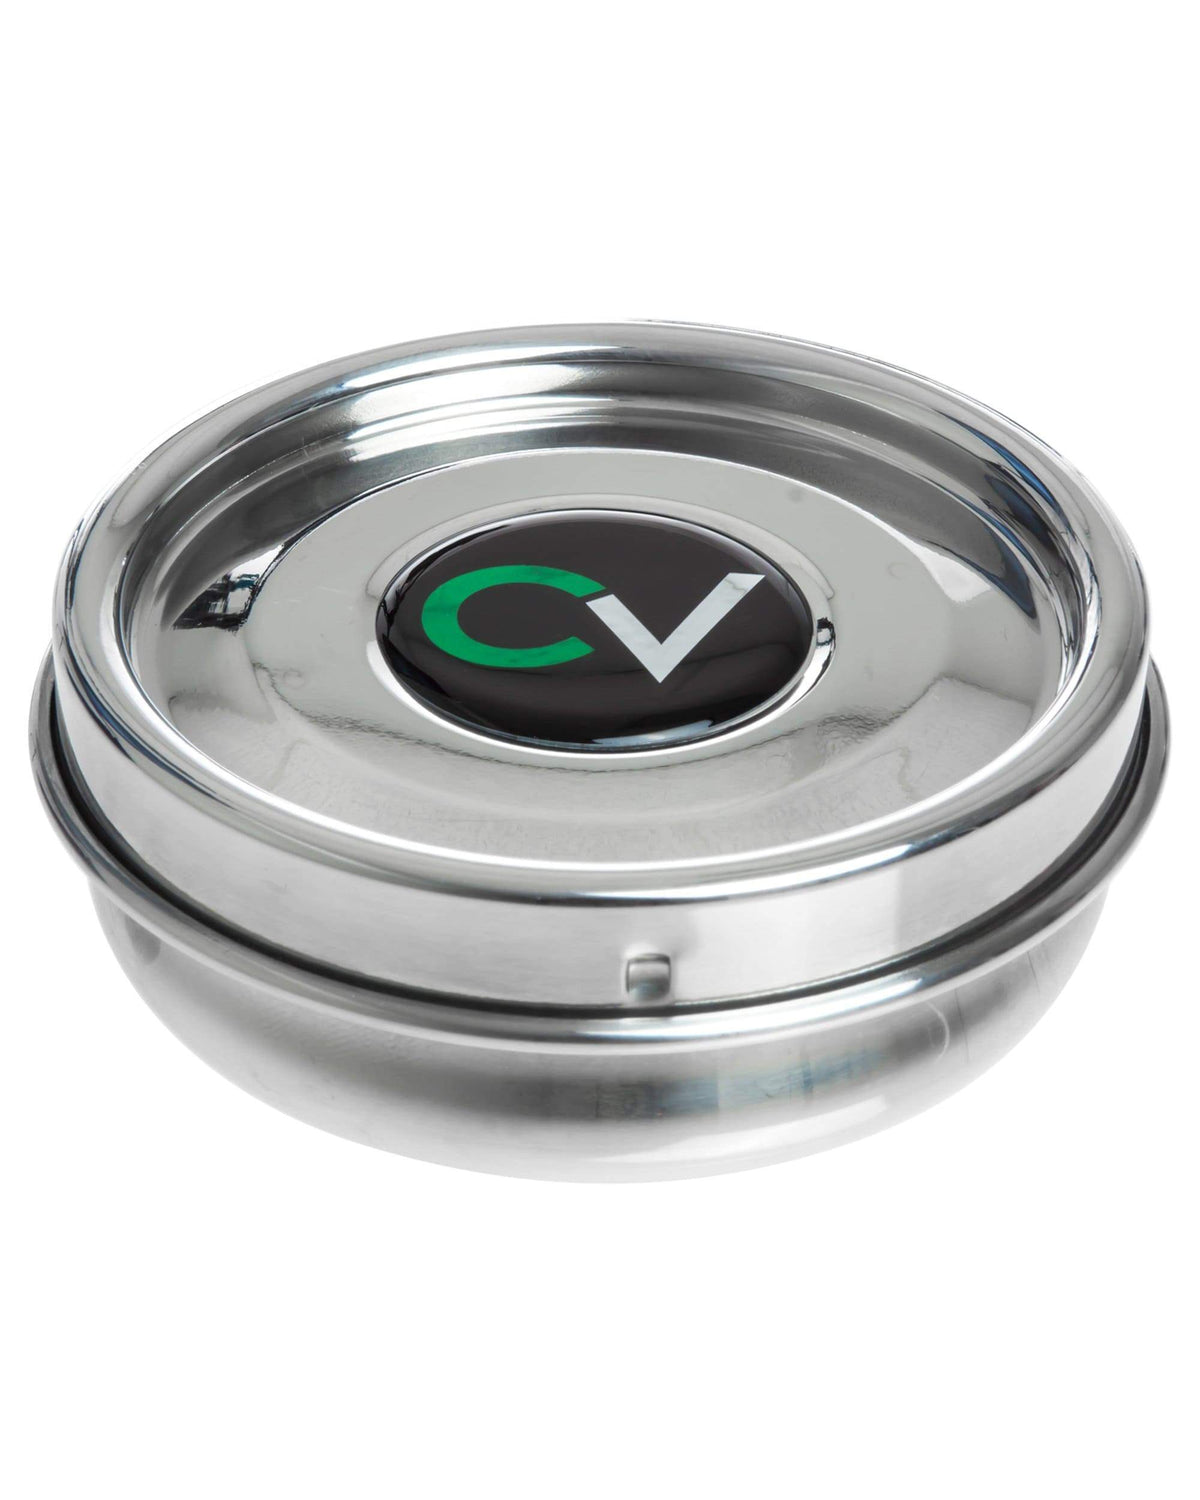 CVault Storage Container CVault